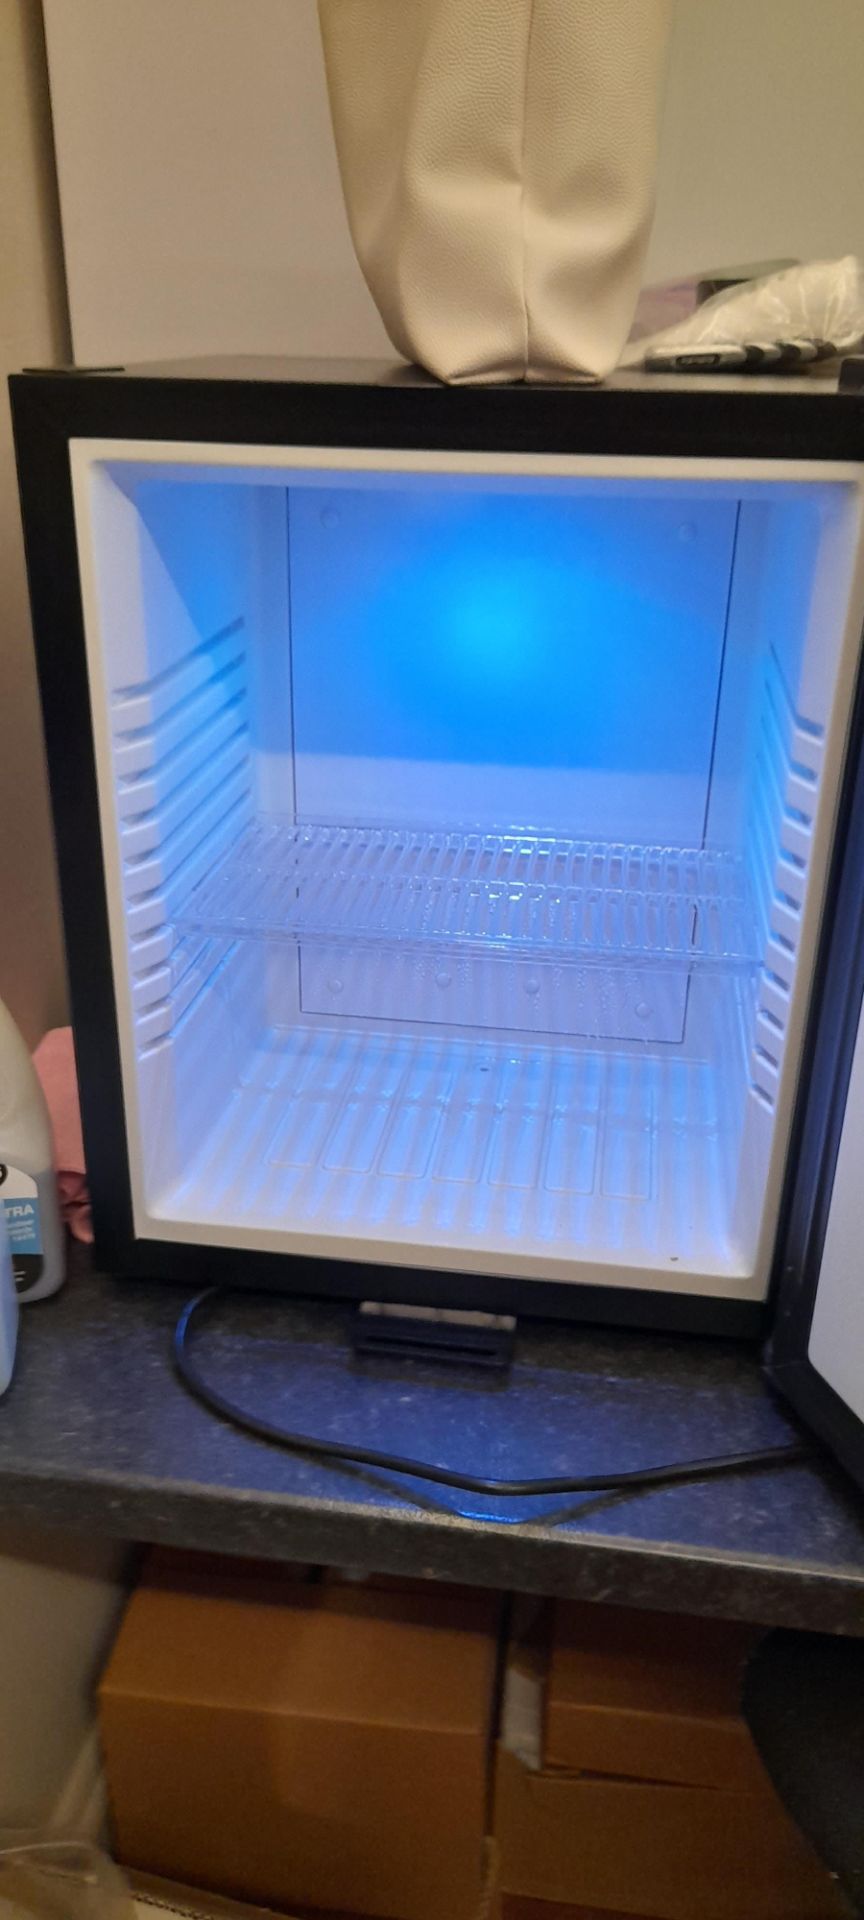 Unbadged mini bar fridge